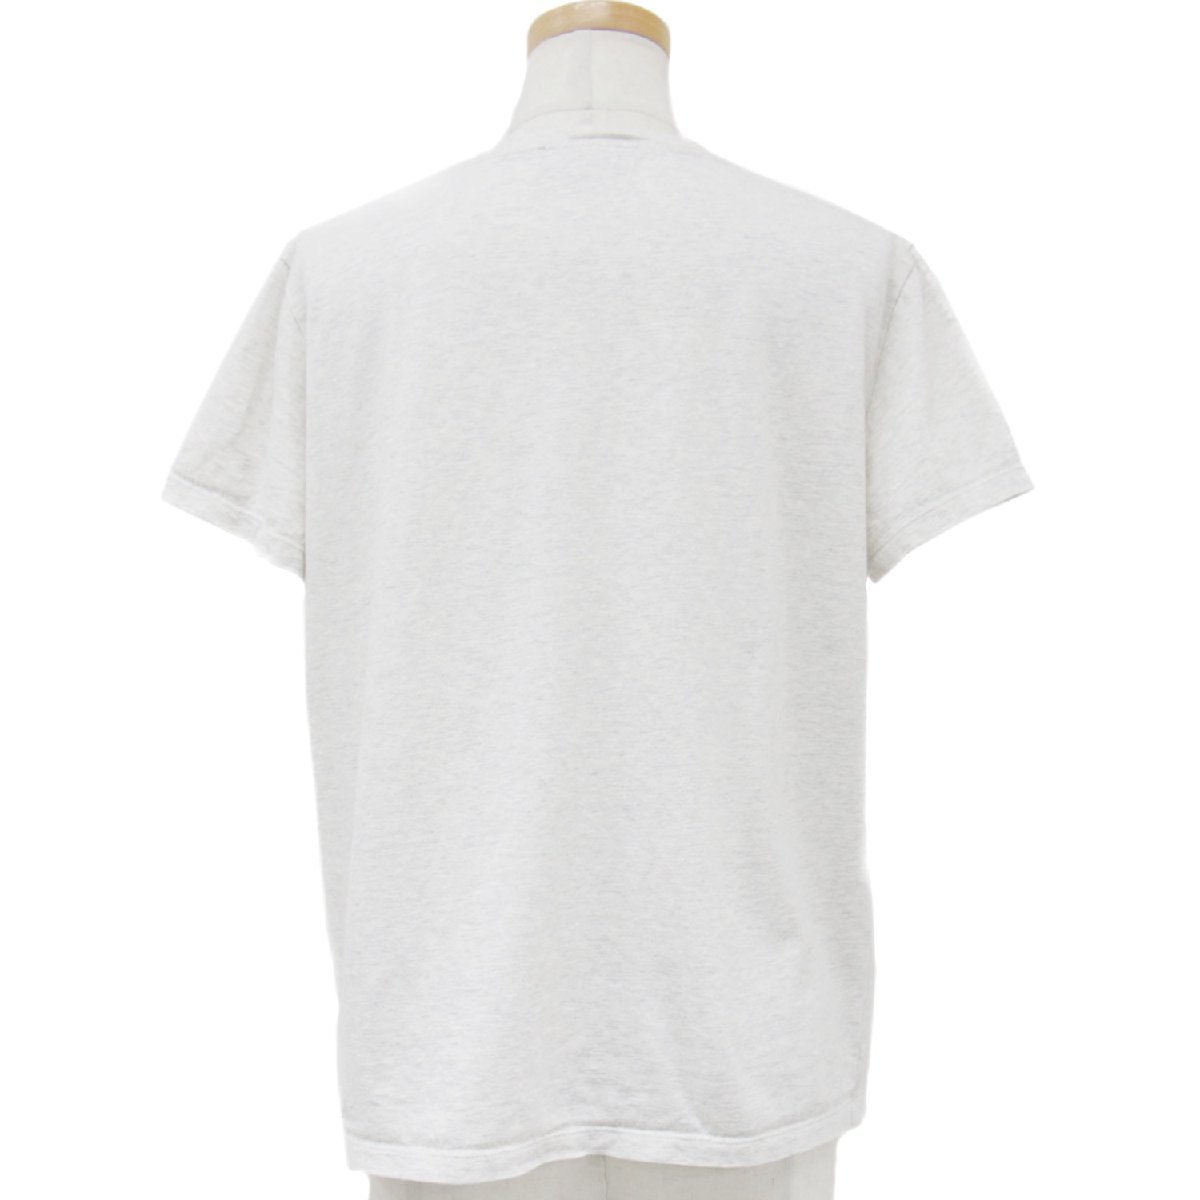 A.P.C. A.P.C. футболка tops cut and sewn светло-серый L короткий рукав вырез лодочкой бренд Logo flocky принт хлопок хлопок 